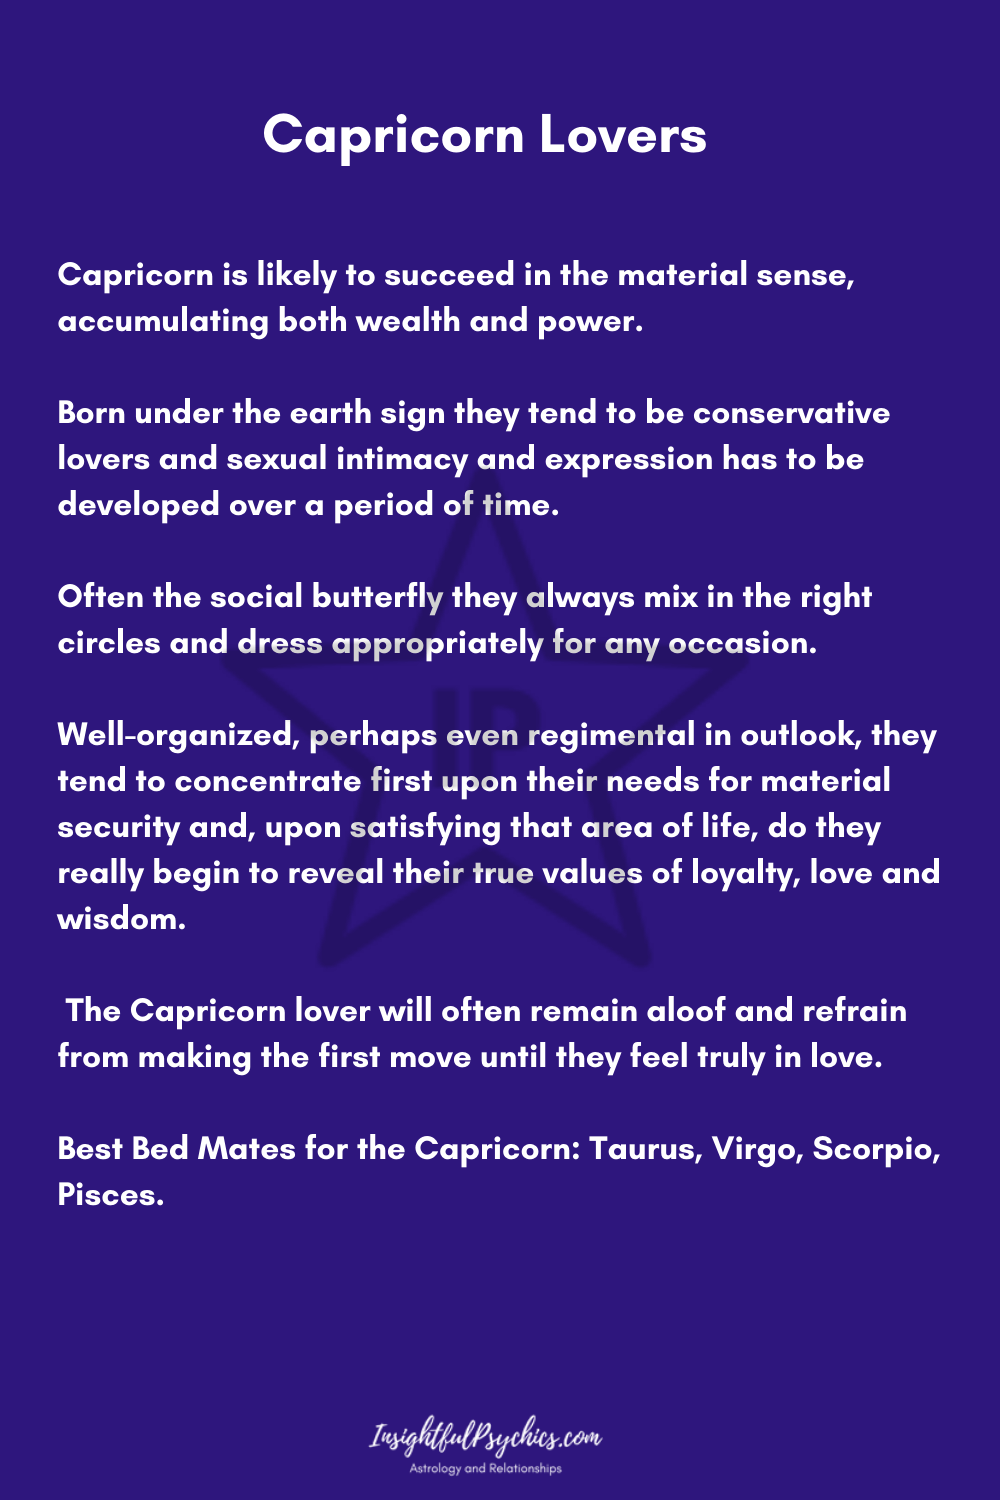 capricorn lovers